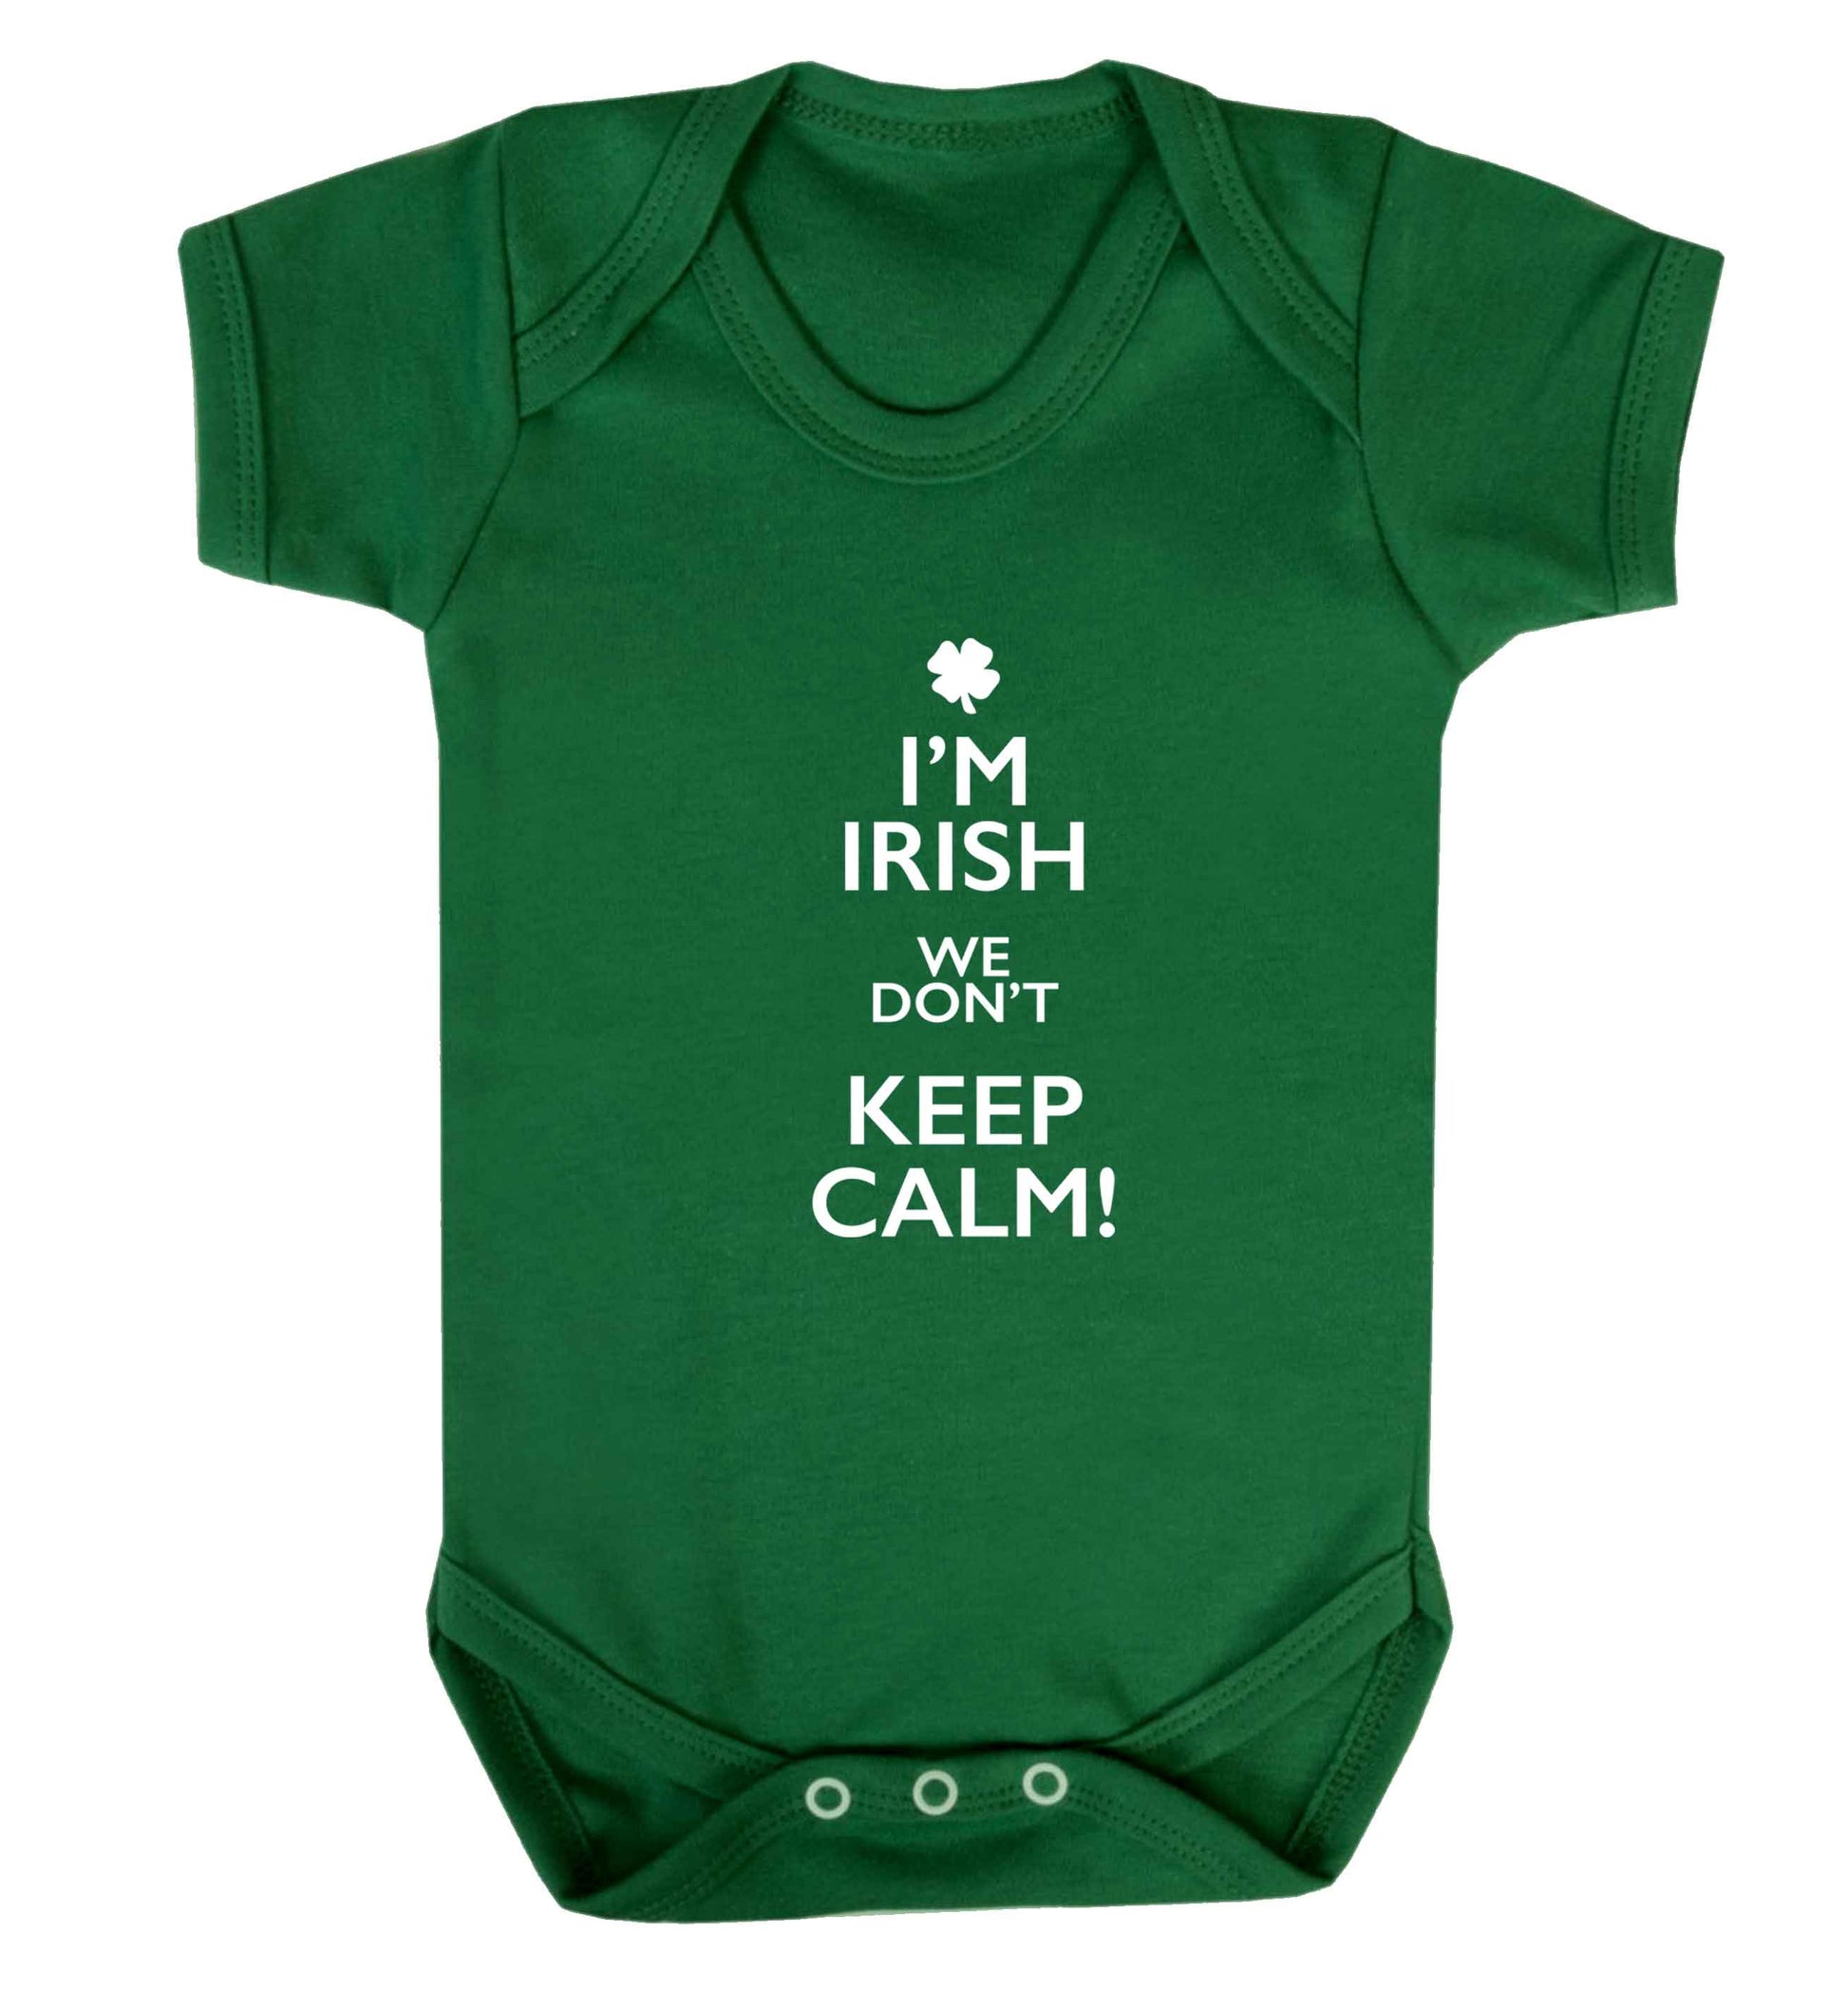 I'm Irish we don't keep calm baby vest green 18-24 months